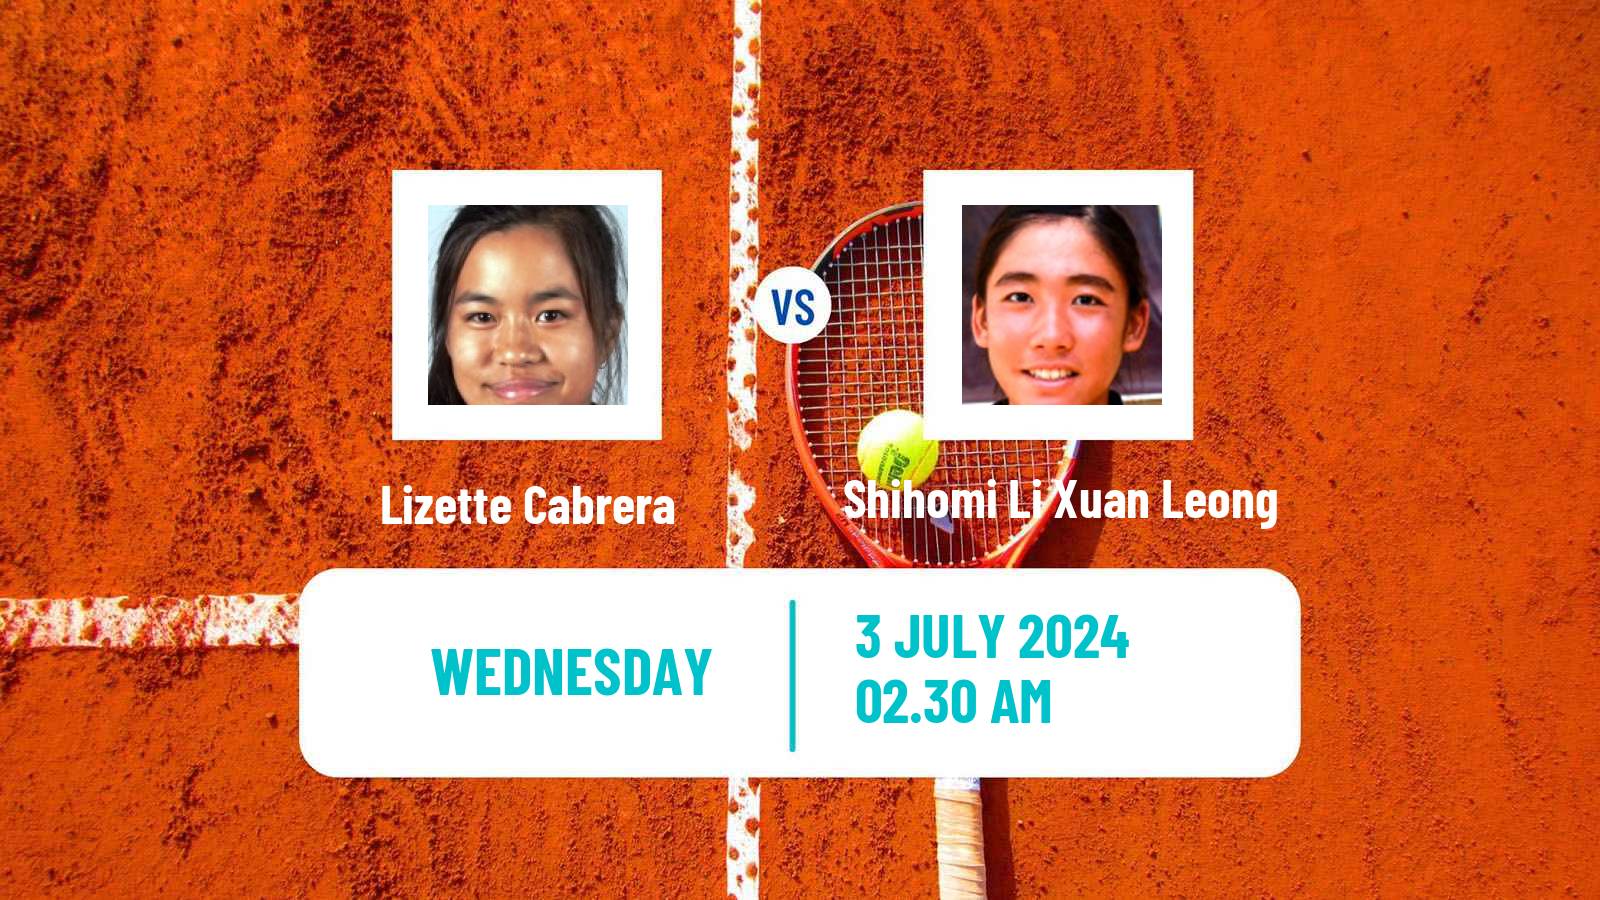 Tennis ITF W35 Nakhon Si Thammarat 2 Women Lizette Cabrera - Shihomi Li Xuan Leong